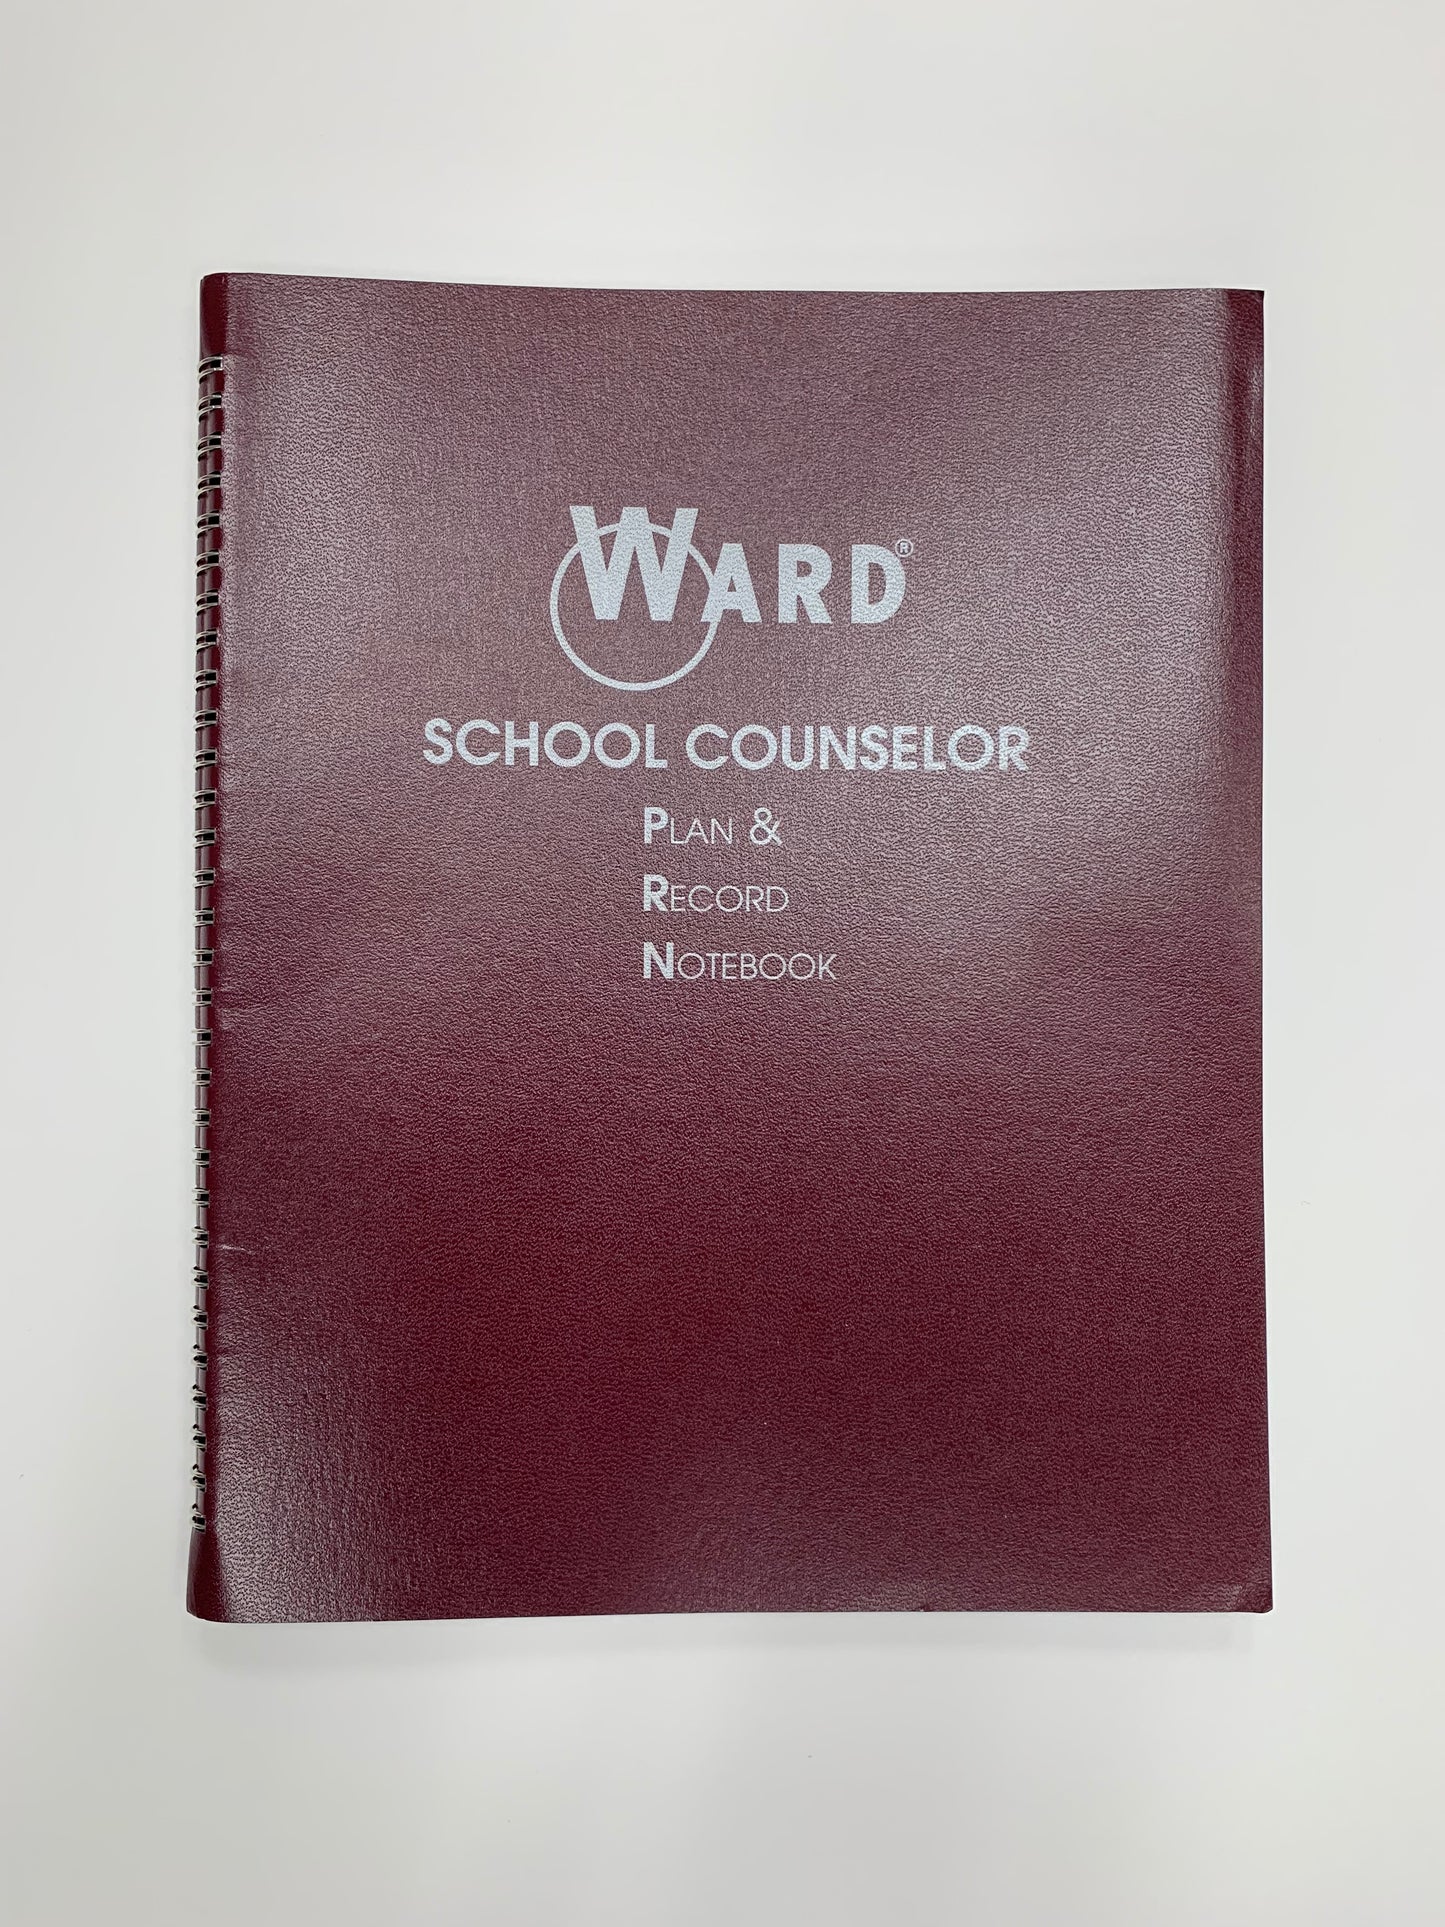 Guidance counselor plan book